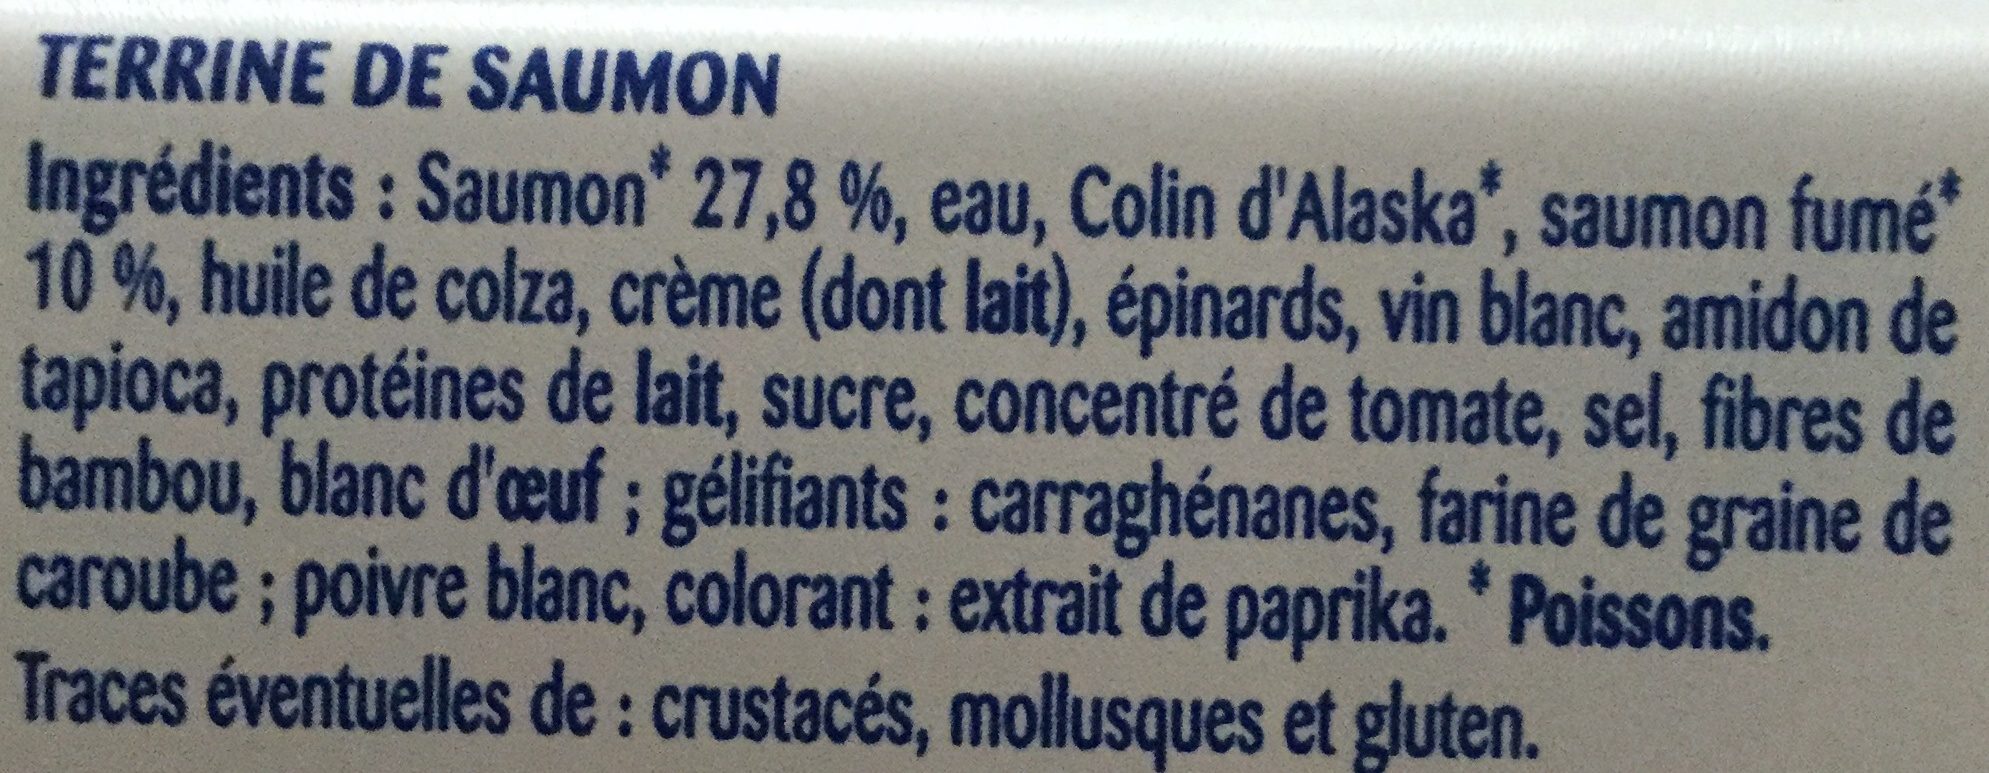 Terrine de Saumon - Ingredientes - fr